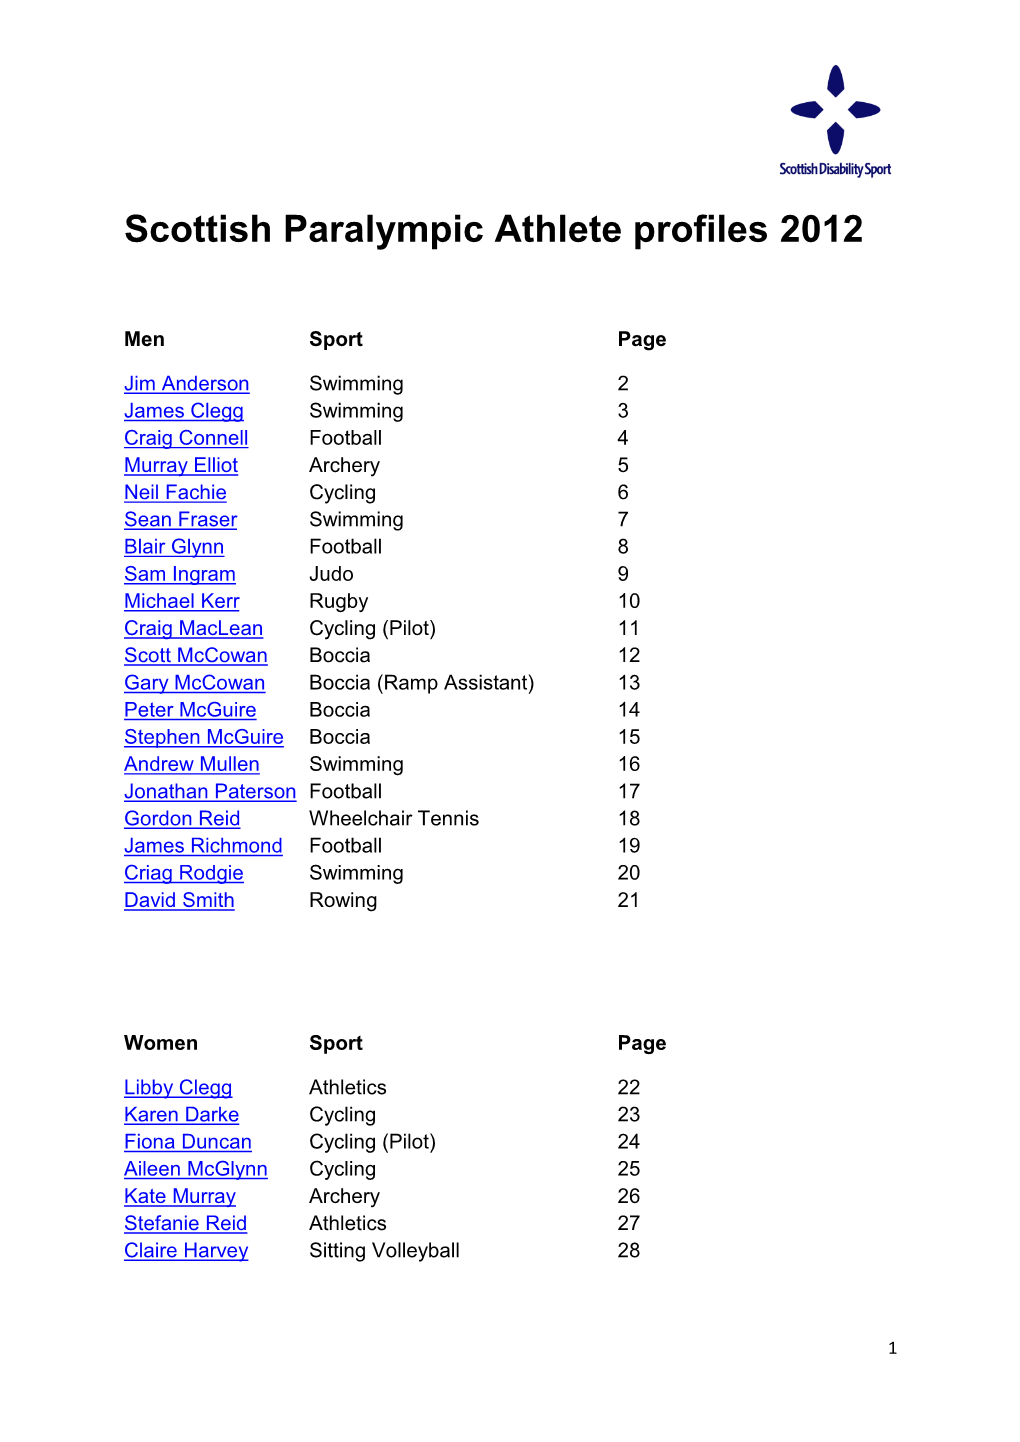 Scottish Paralympic Athlete Profiles 2012